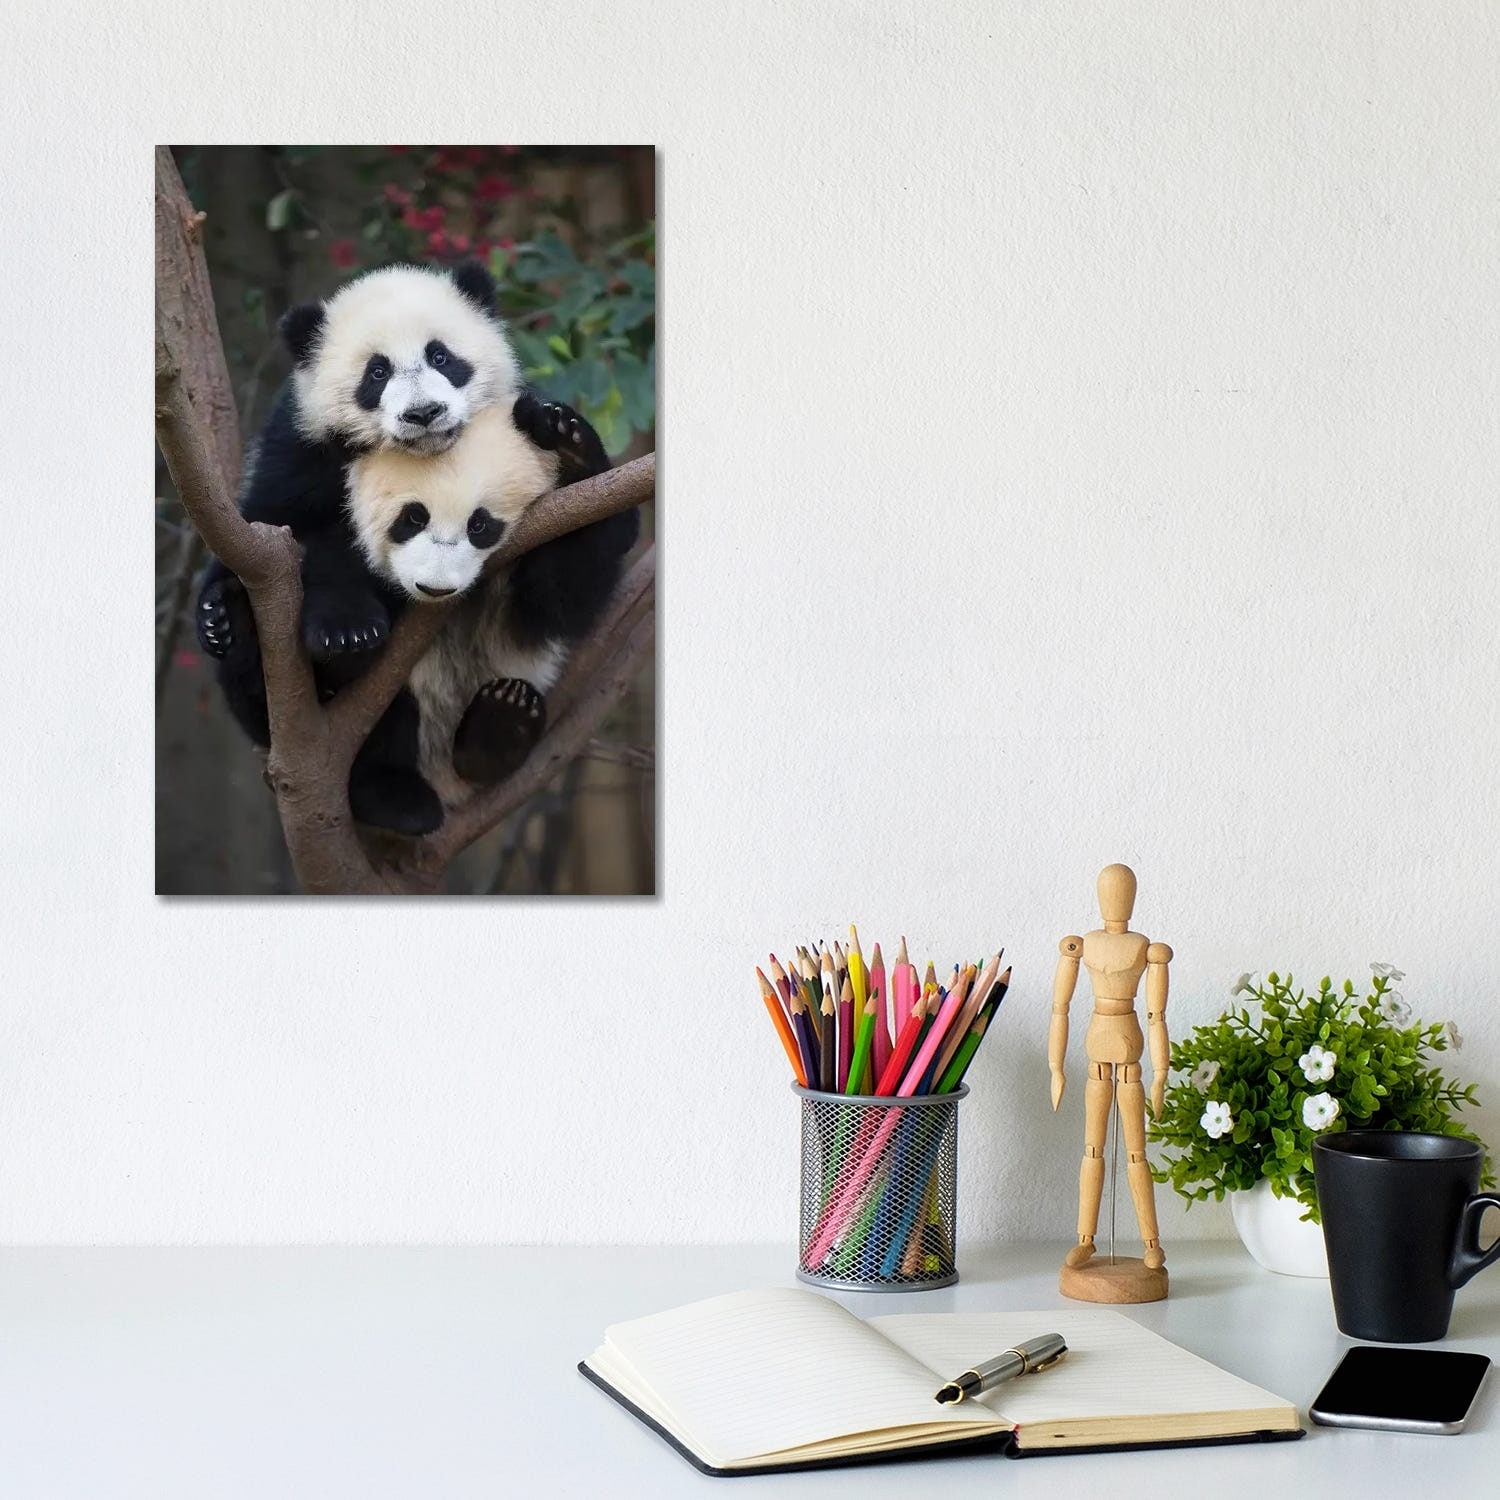 Giant Panda Cub In Tree Throw Pillow by Suzi Eszterhas - Fine Art America